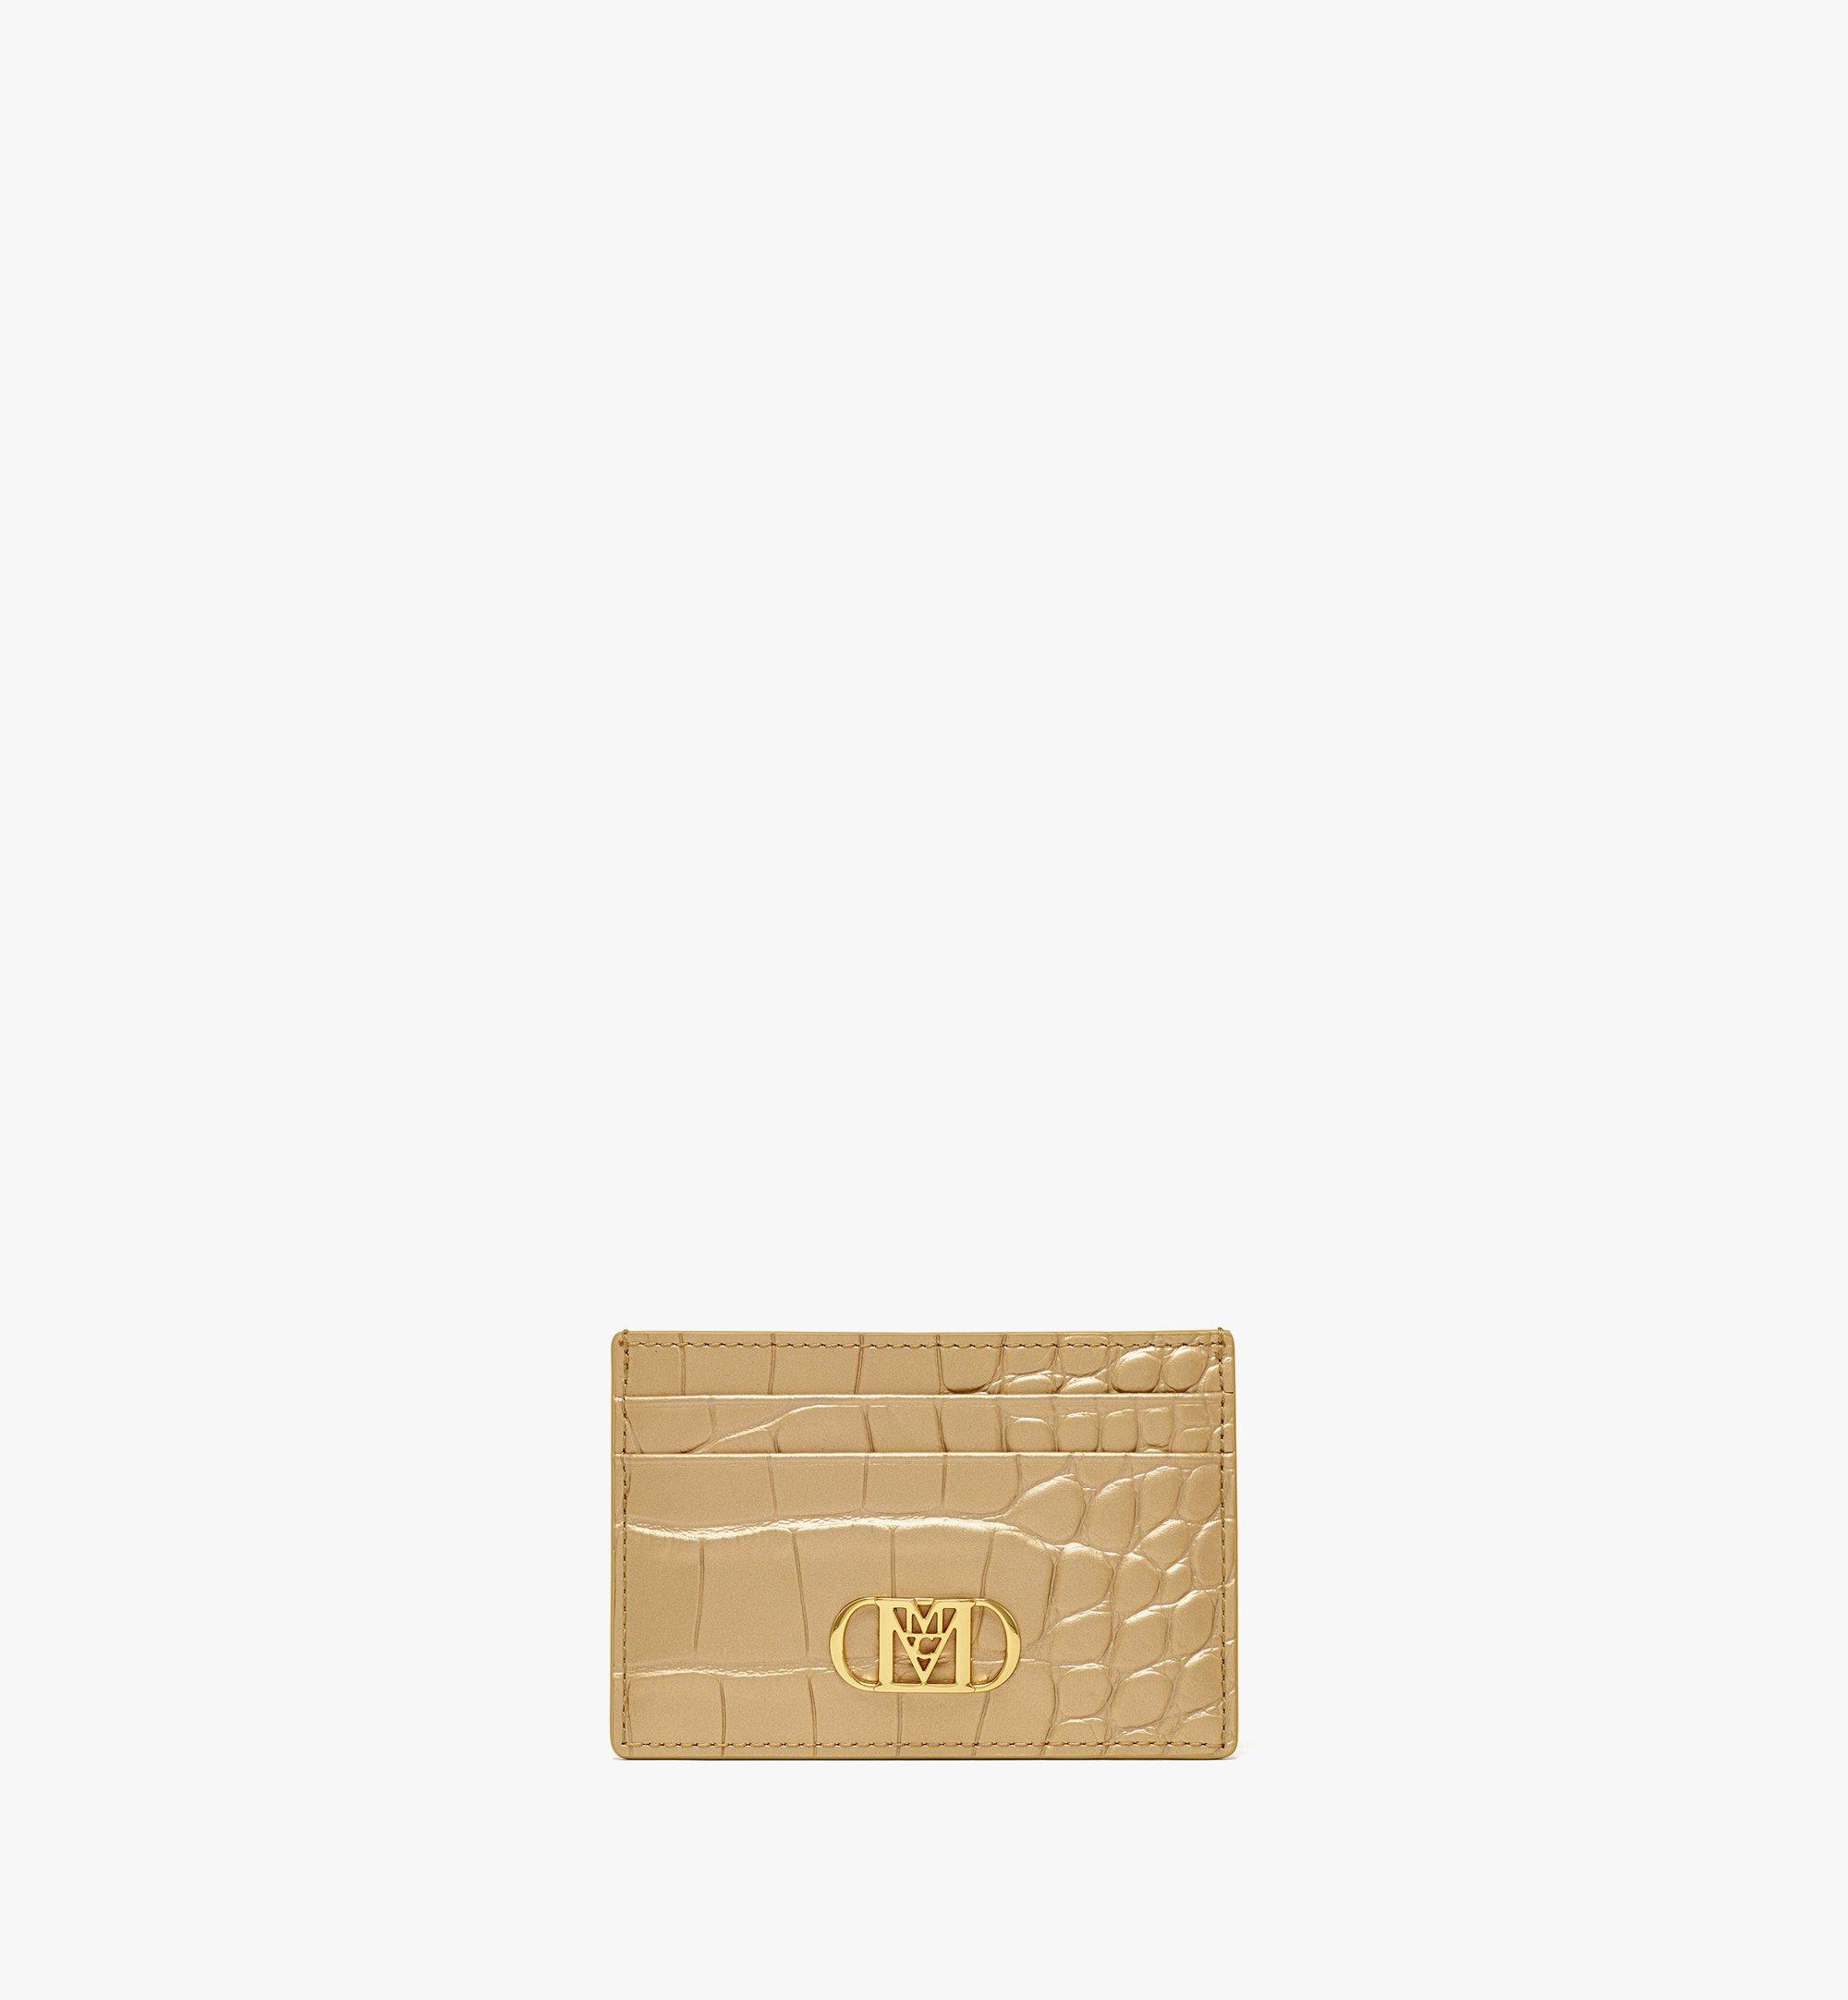 MCM Mode Travia Card Case in Metallic Croco Leather Gold MYADSLD02DG001 Alternate View 1